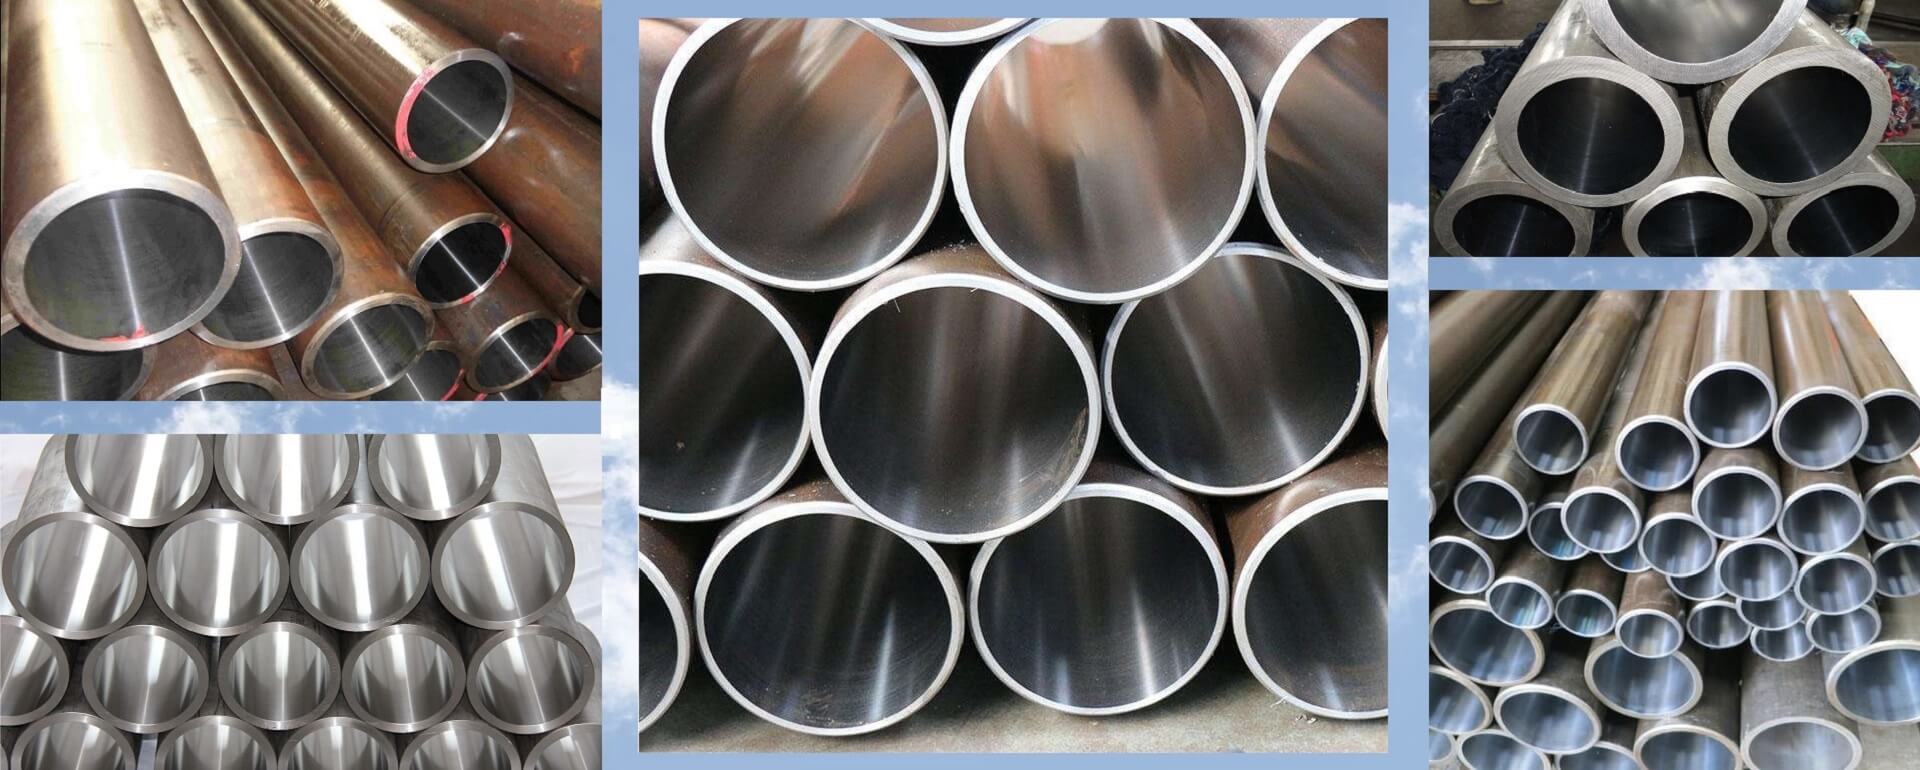 Hone-tubes-honed-cylinder-tubing